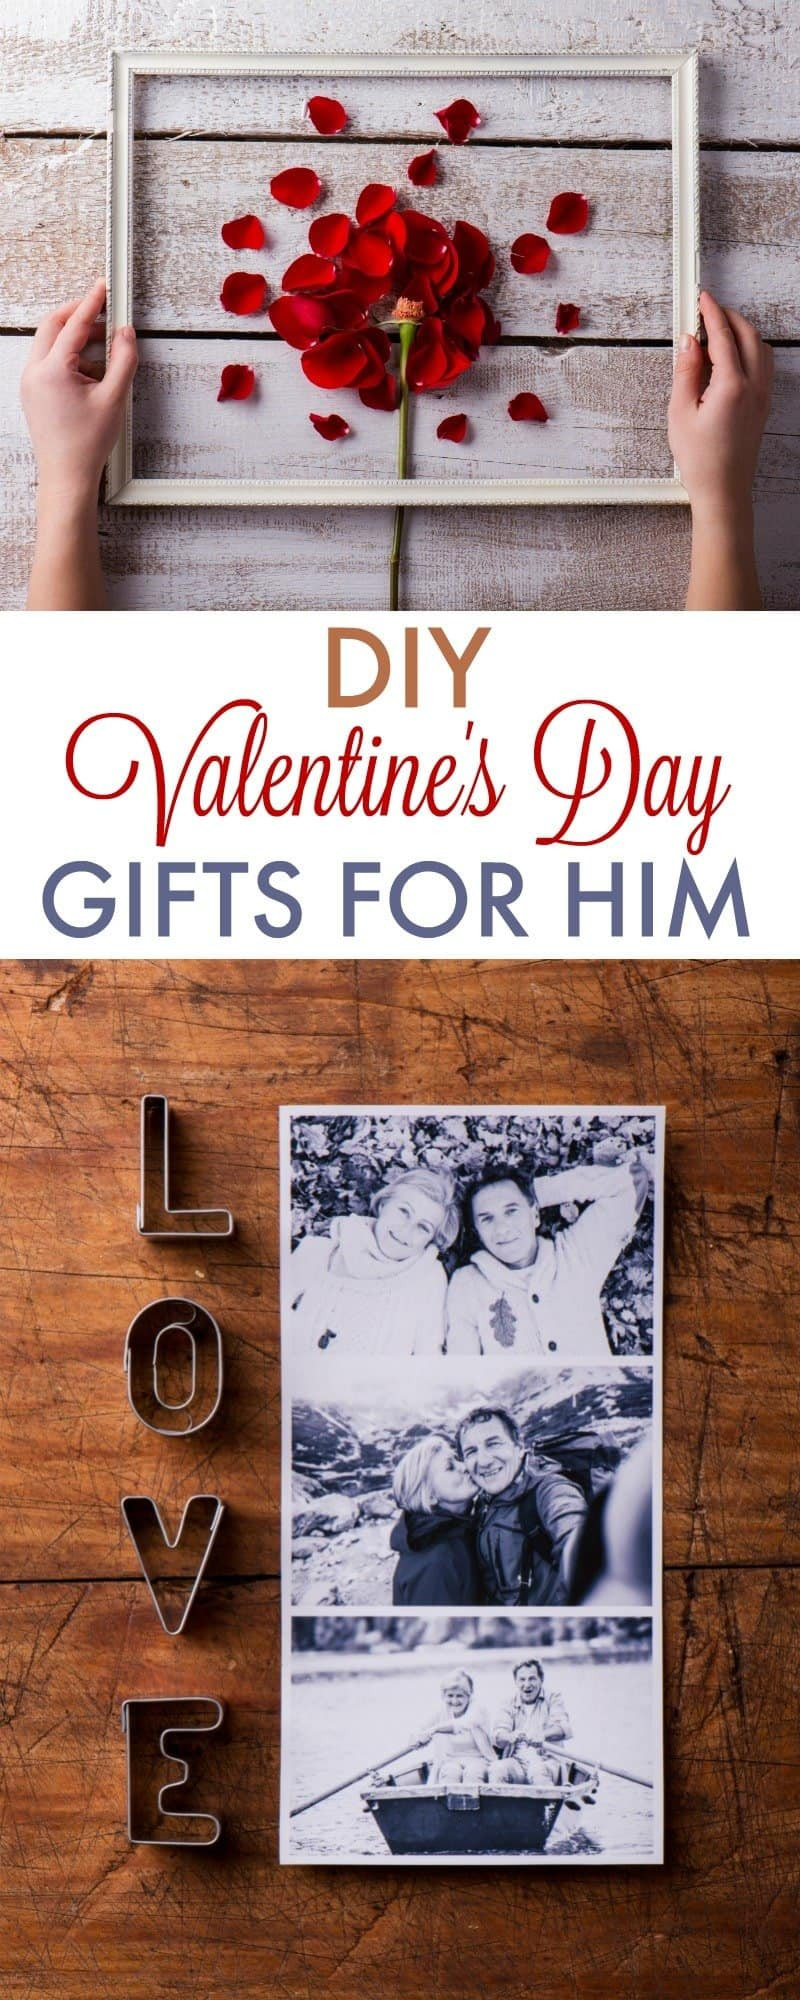 Best ideas about DIY Valentines Gifts For Boyfriends
. Save or Pin DIY Valentine s Day Gifts for Boyfriend 730 Sage Street Now.